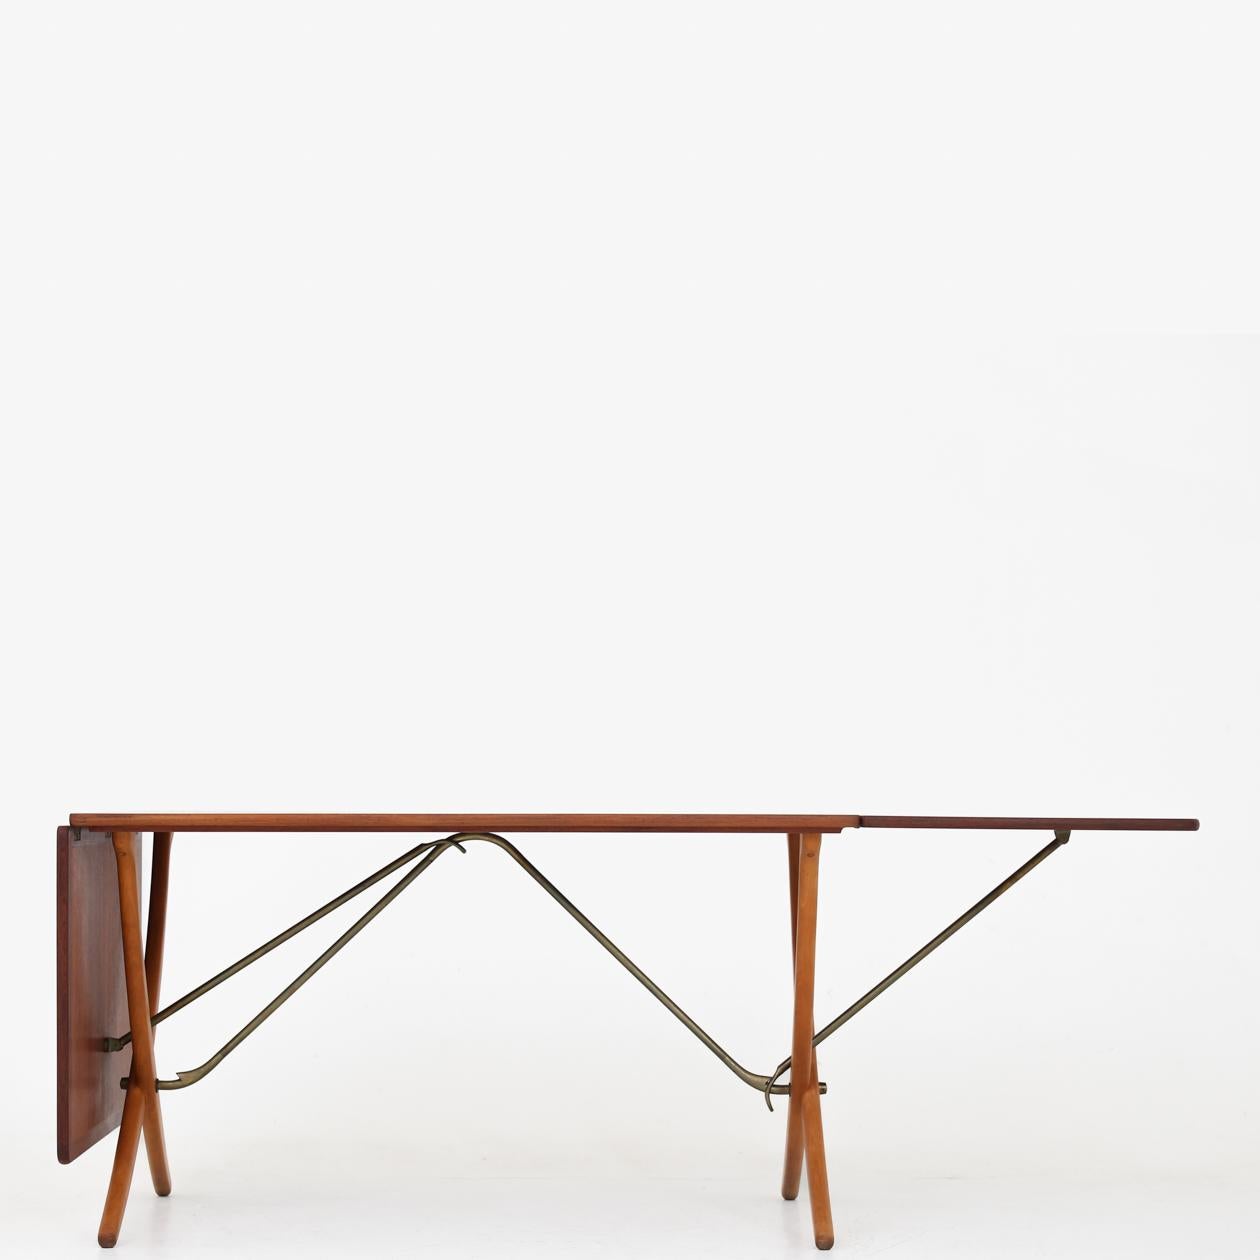 20th Century Sabre-Legged Dining Table by Hans J. Wegner